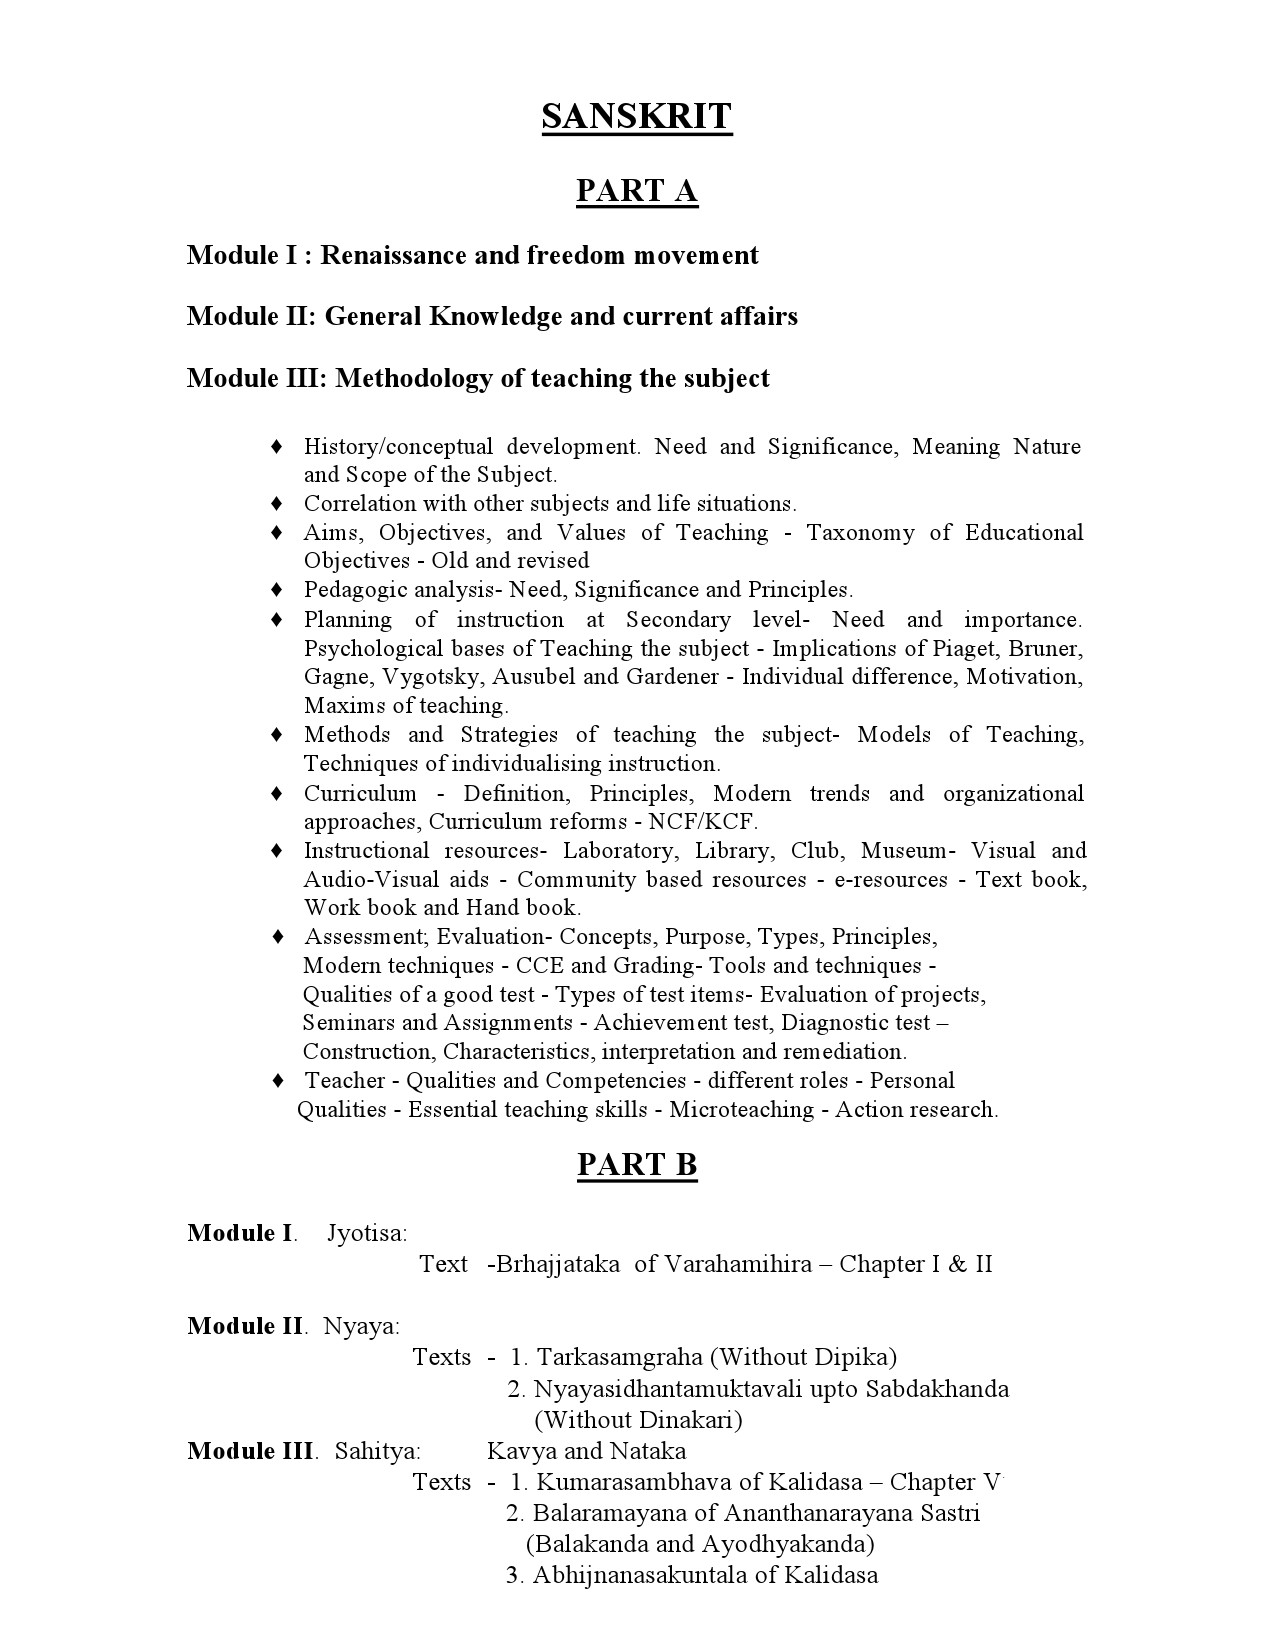 High School Assistant Sanskrit Part A Kerala Examination Syllabus 2021 - Notification Image 1